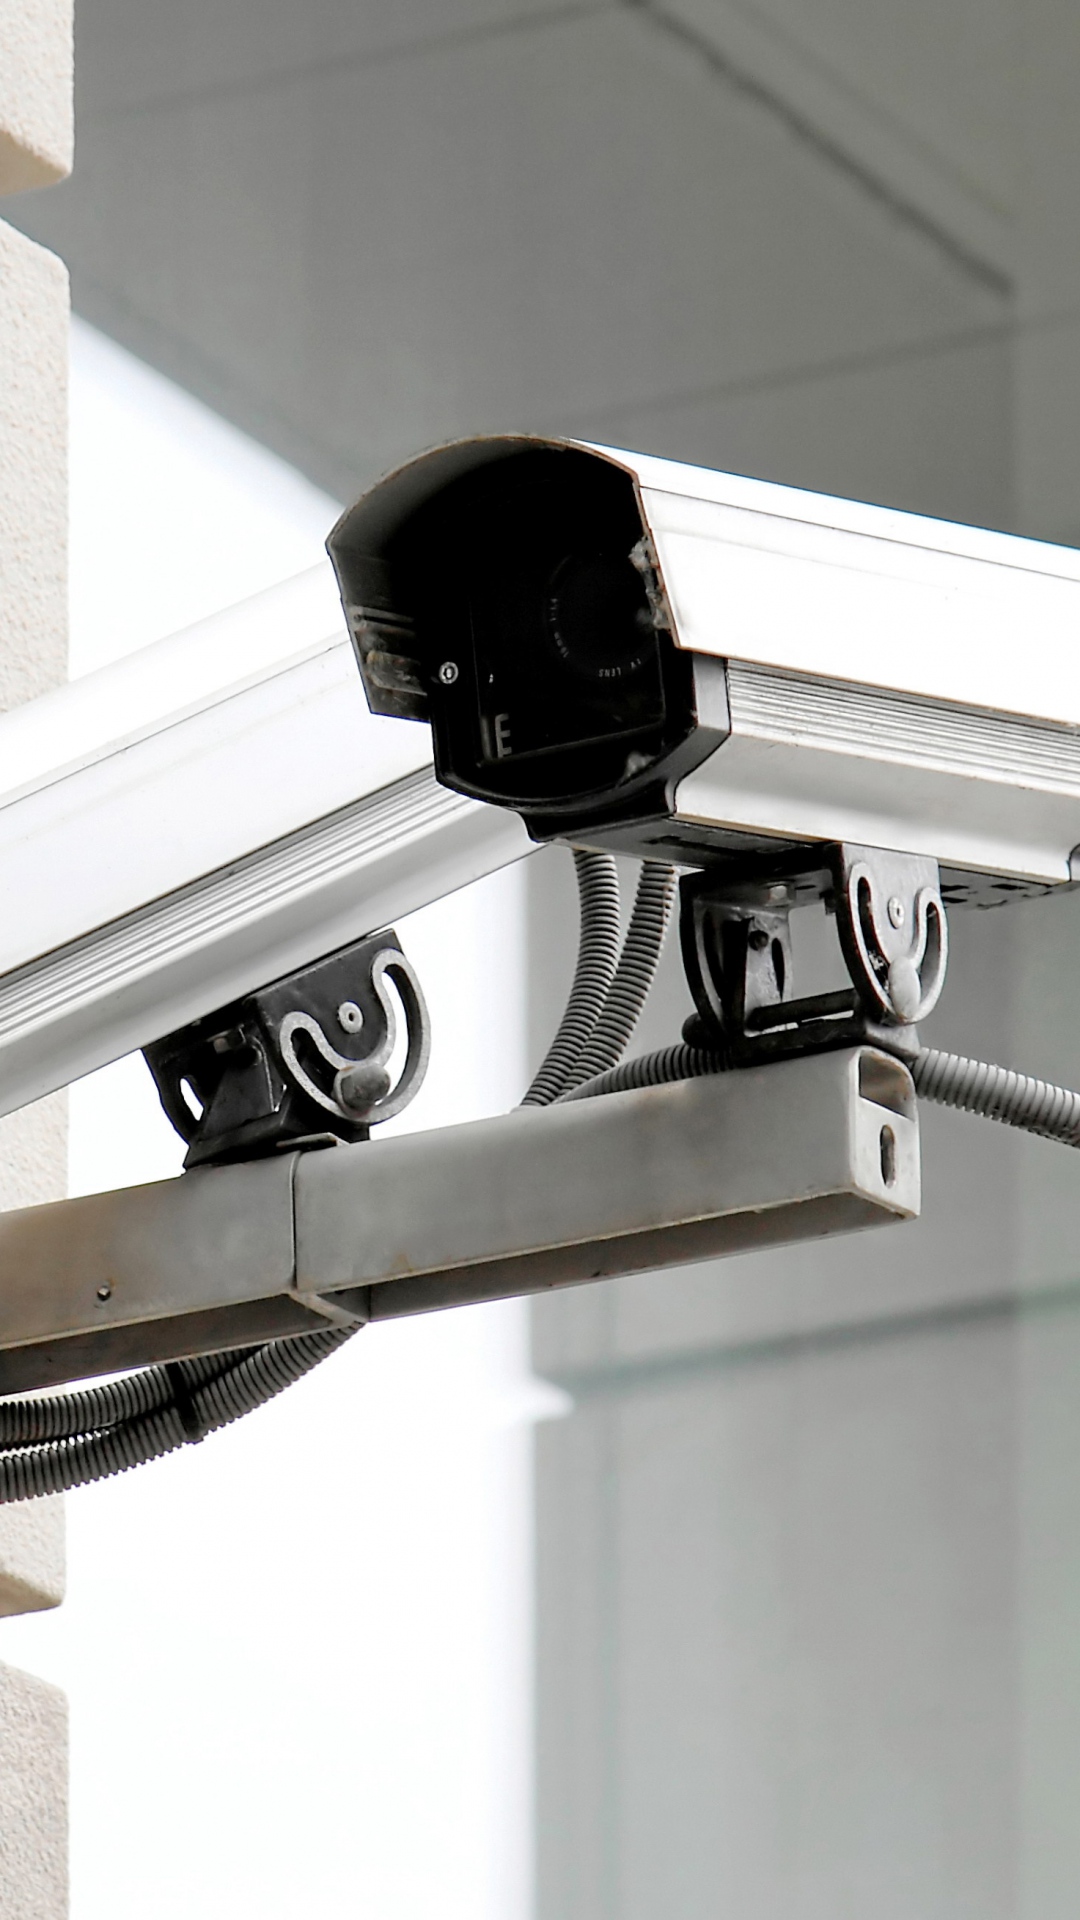 Download Wallpaper 1080x1920 camera surveillance steam security